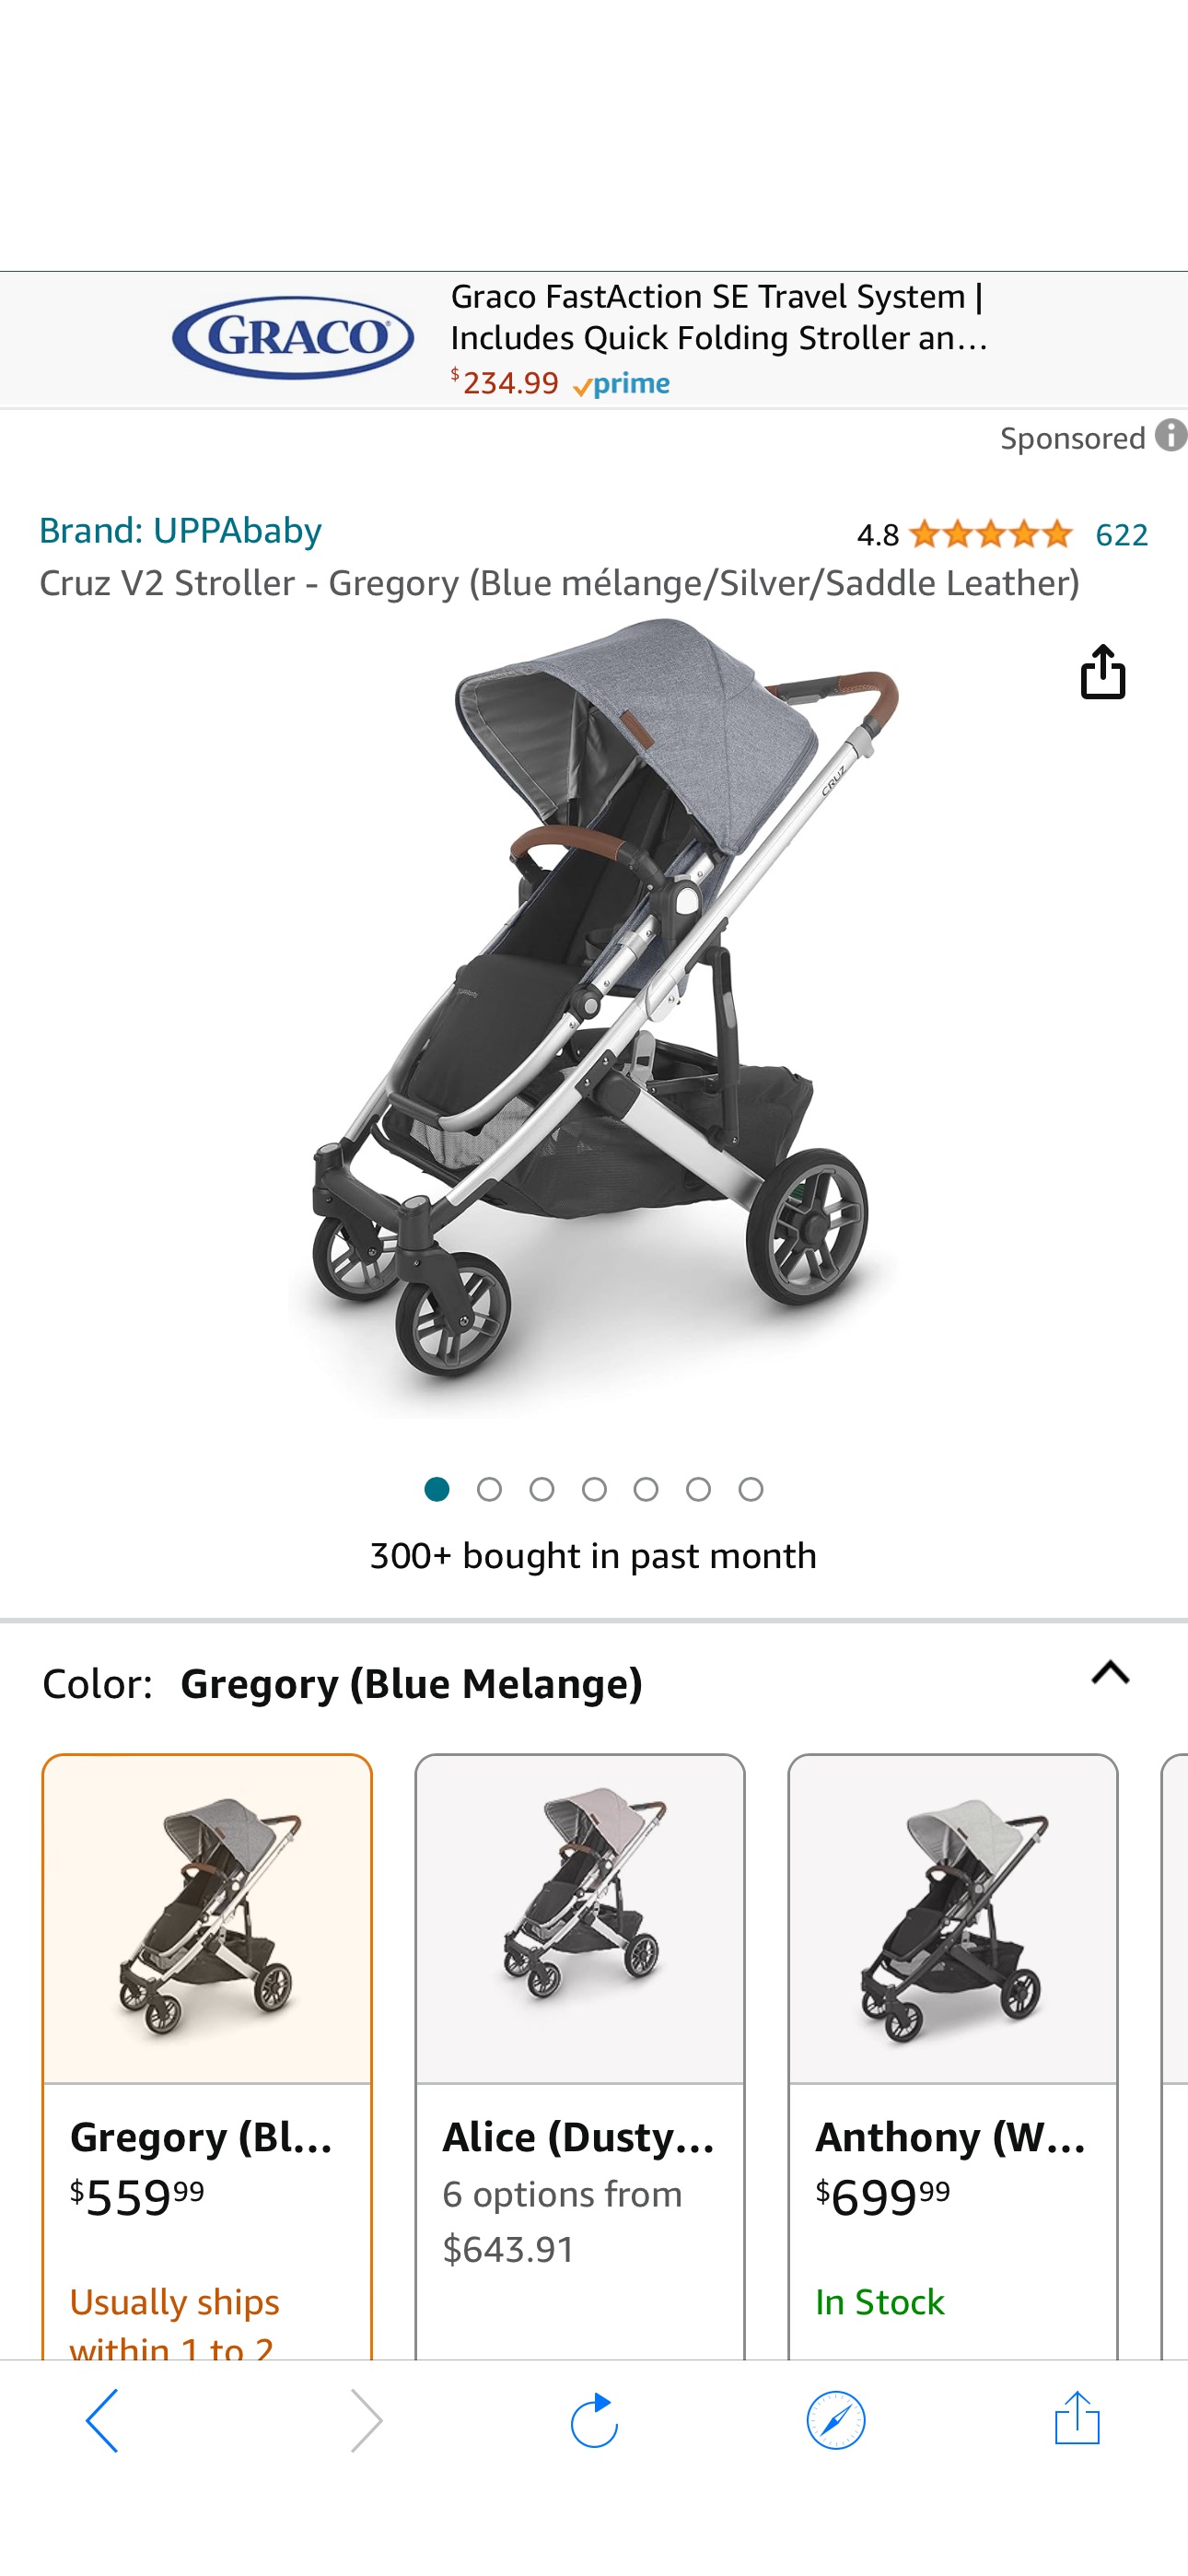 Amazon.com : Cruz V2 Stroller - Gregory (Blue mélange/Silver/Saddle Leather) : Baby